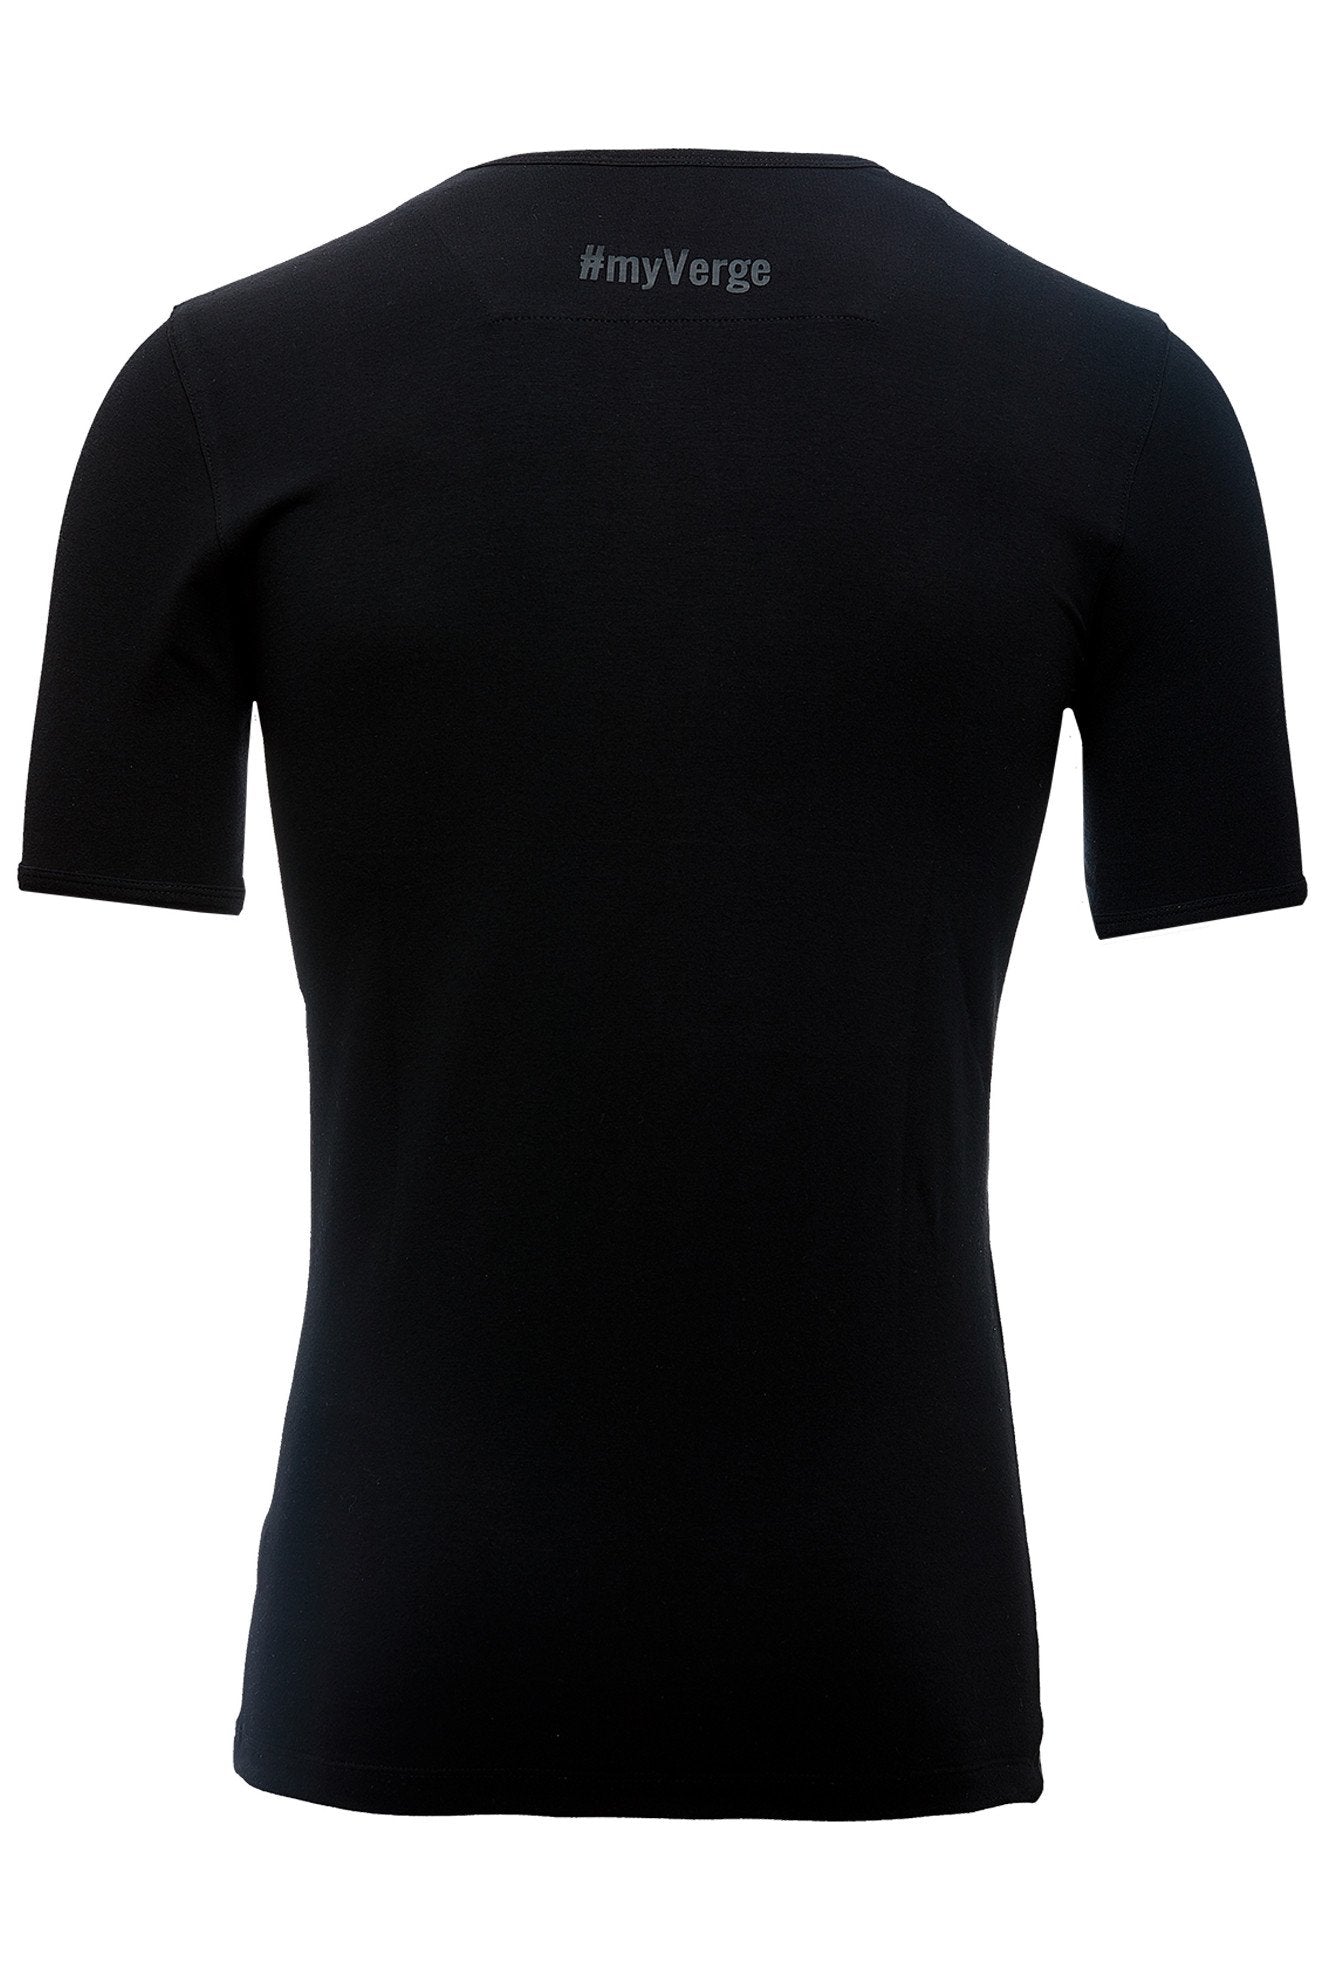 Verge Koszulka T-Shirt Męska - Czarny